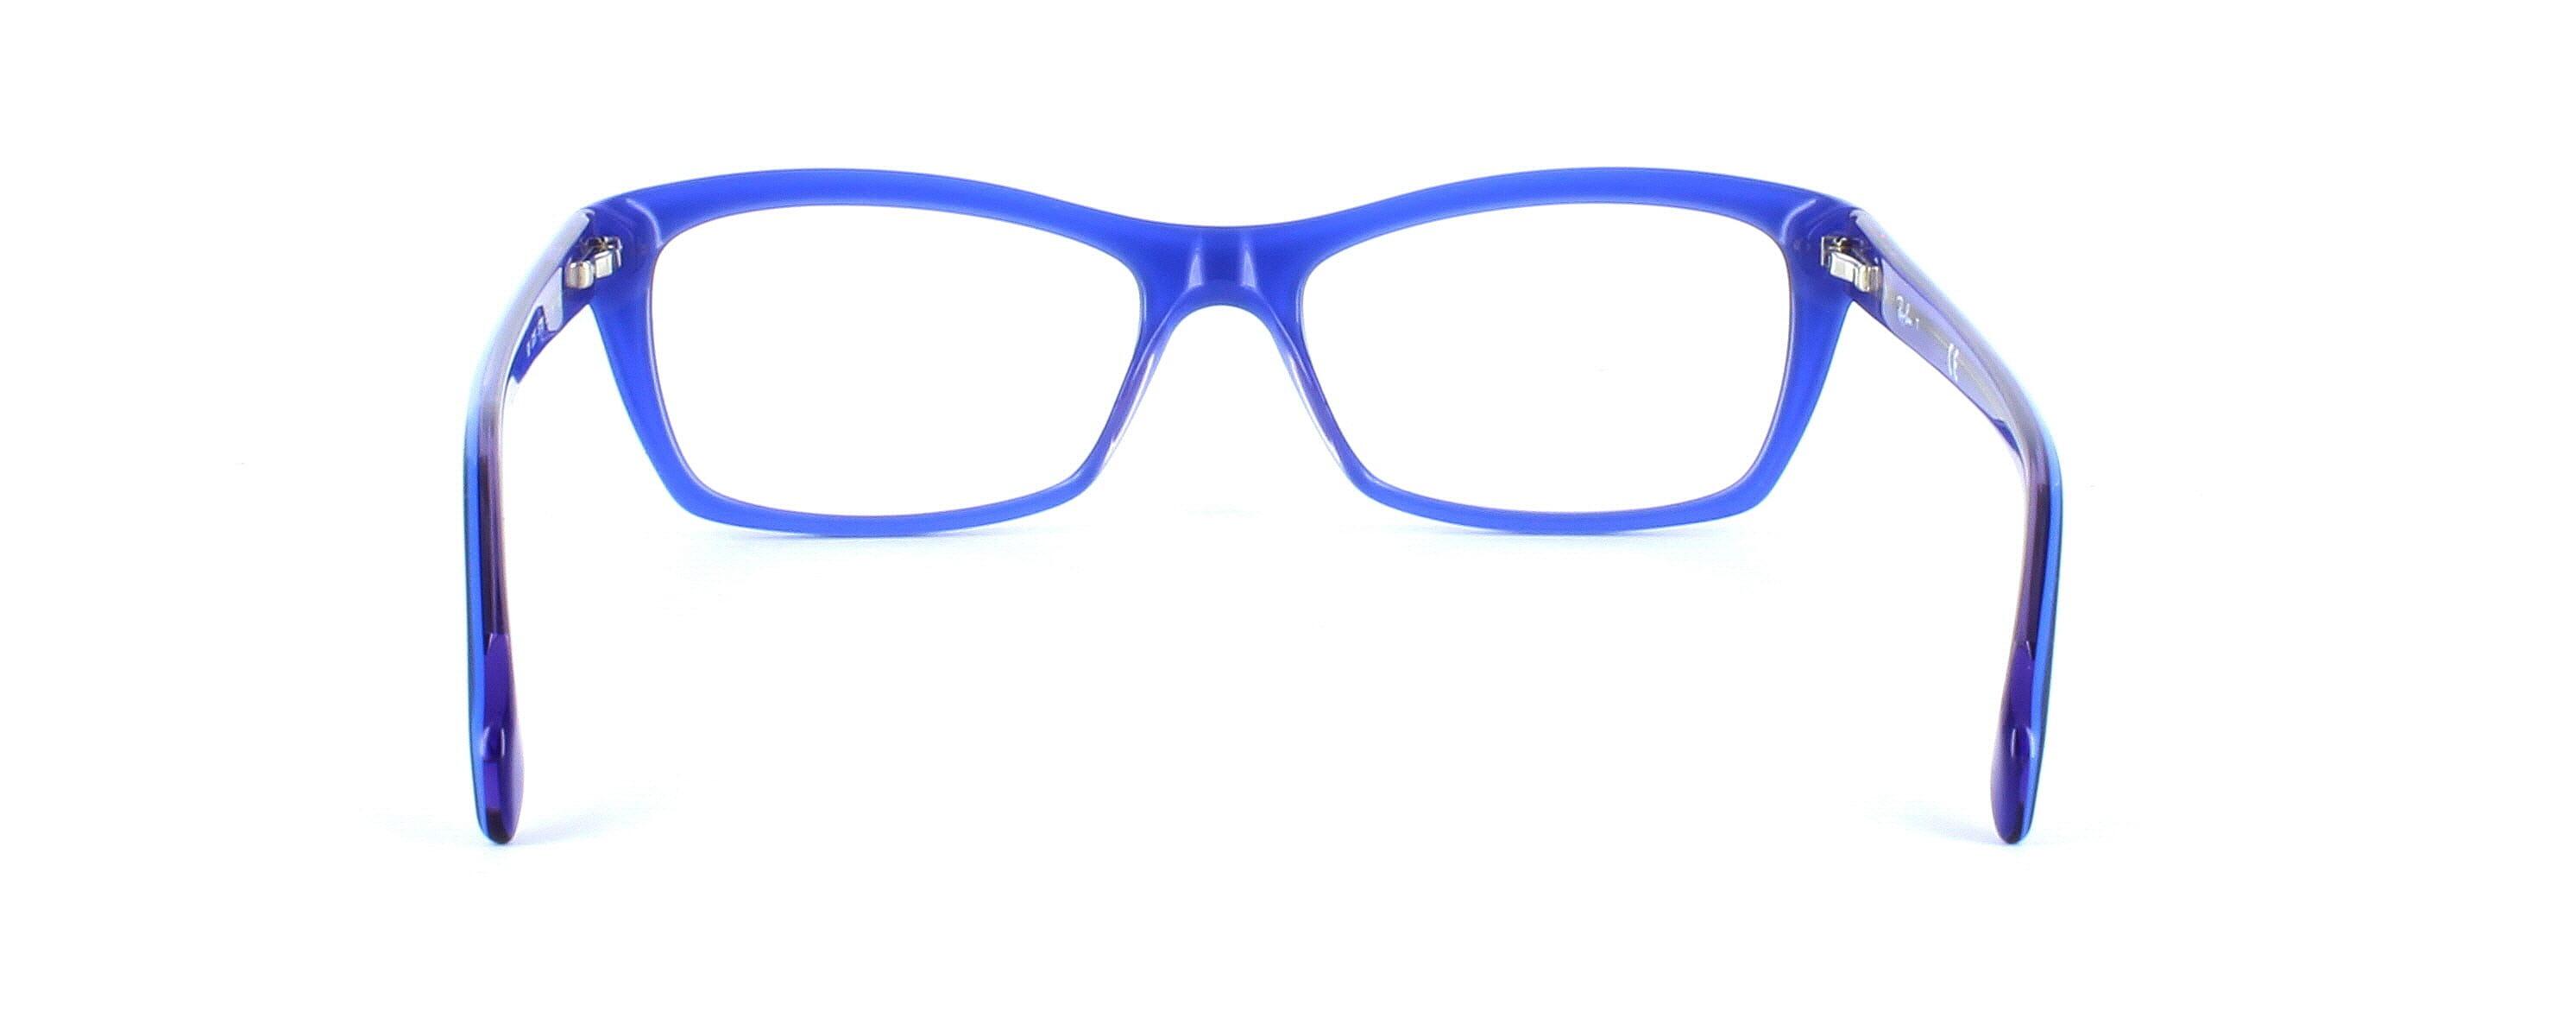 Ray Ban 53641 - 2-Tone blue ladies acetate glasses frame - image view 4